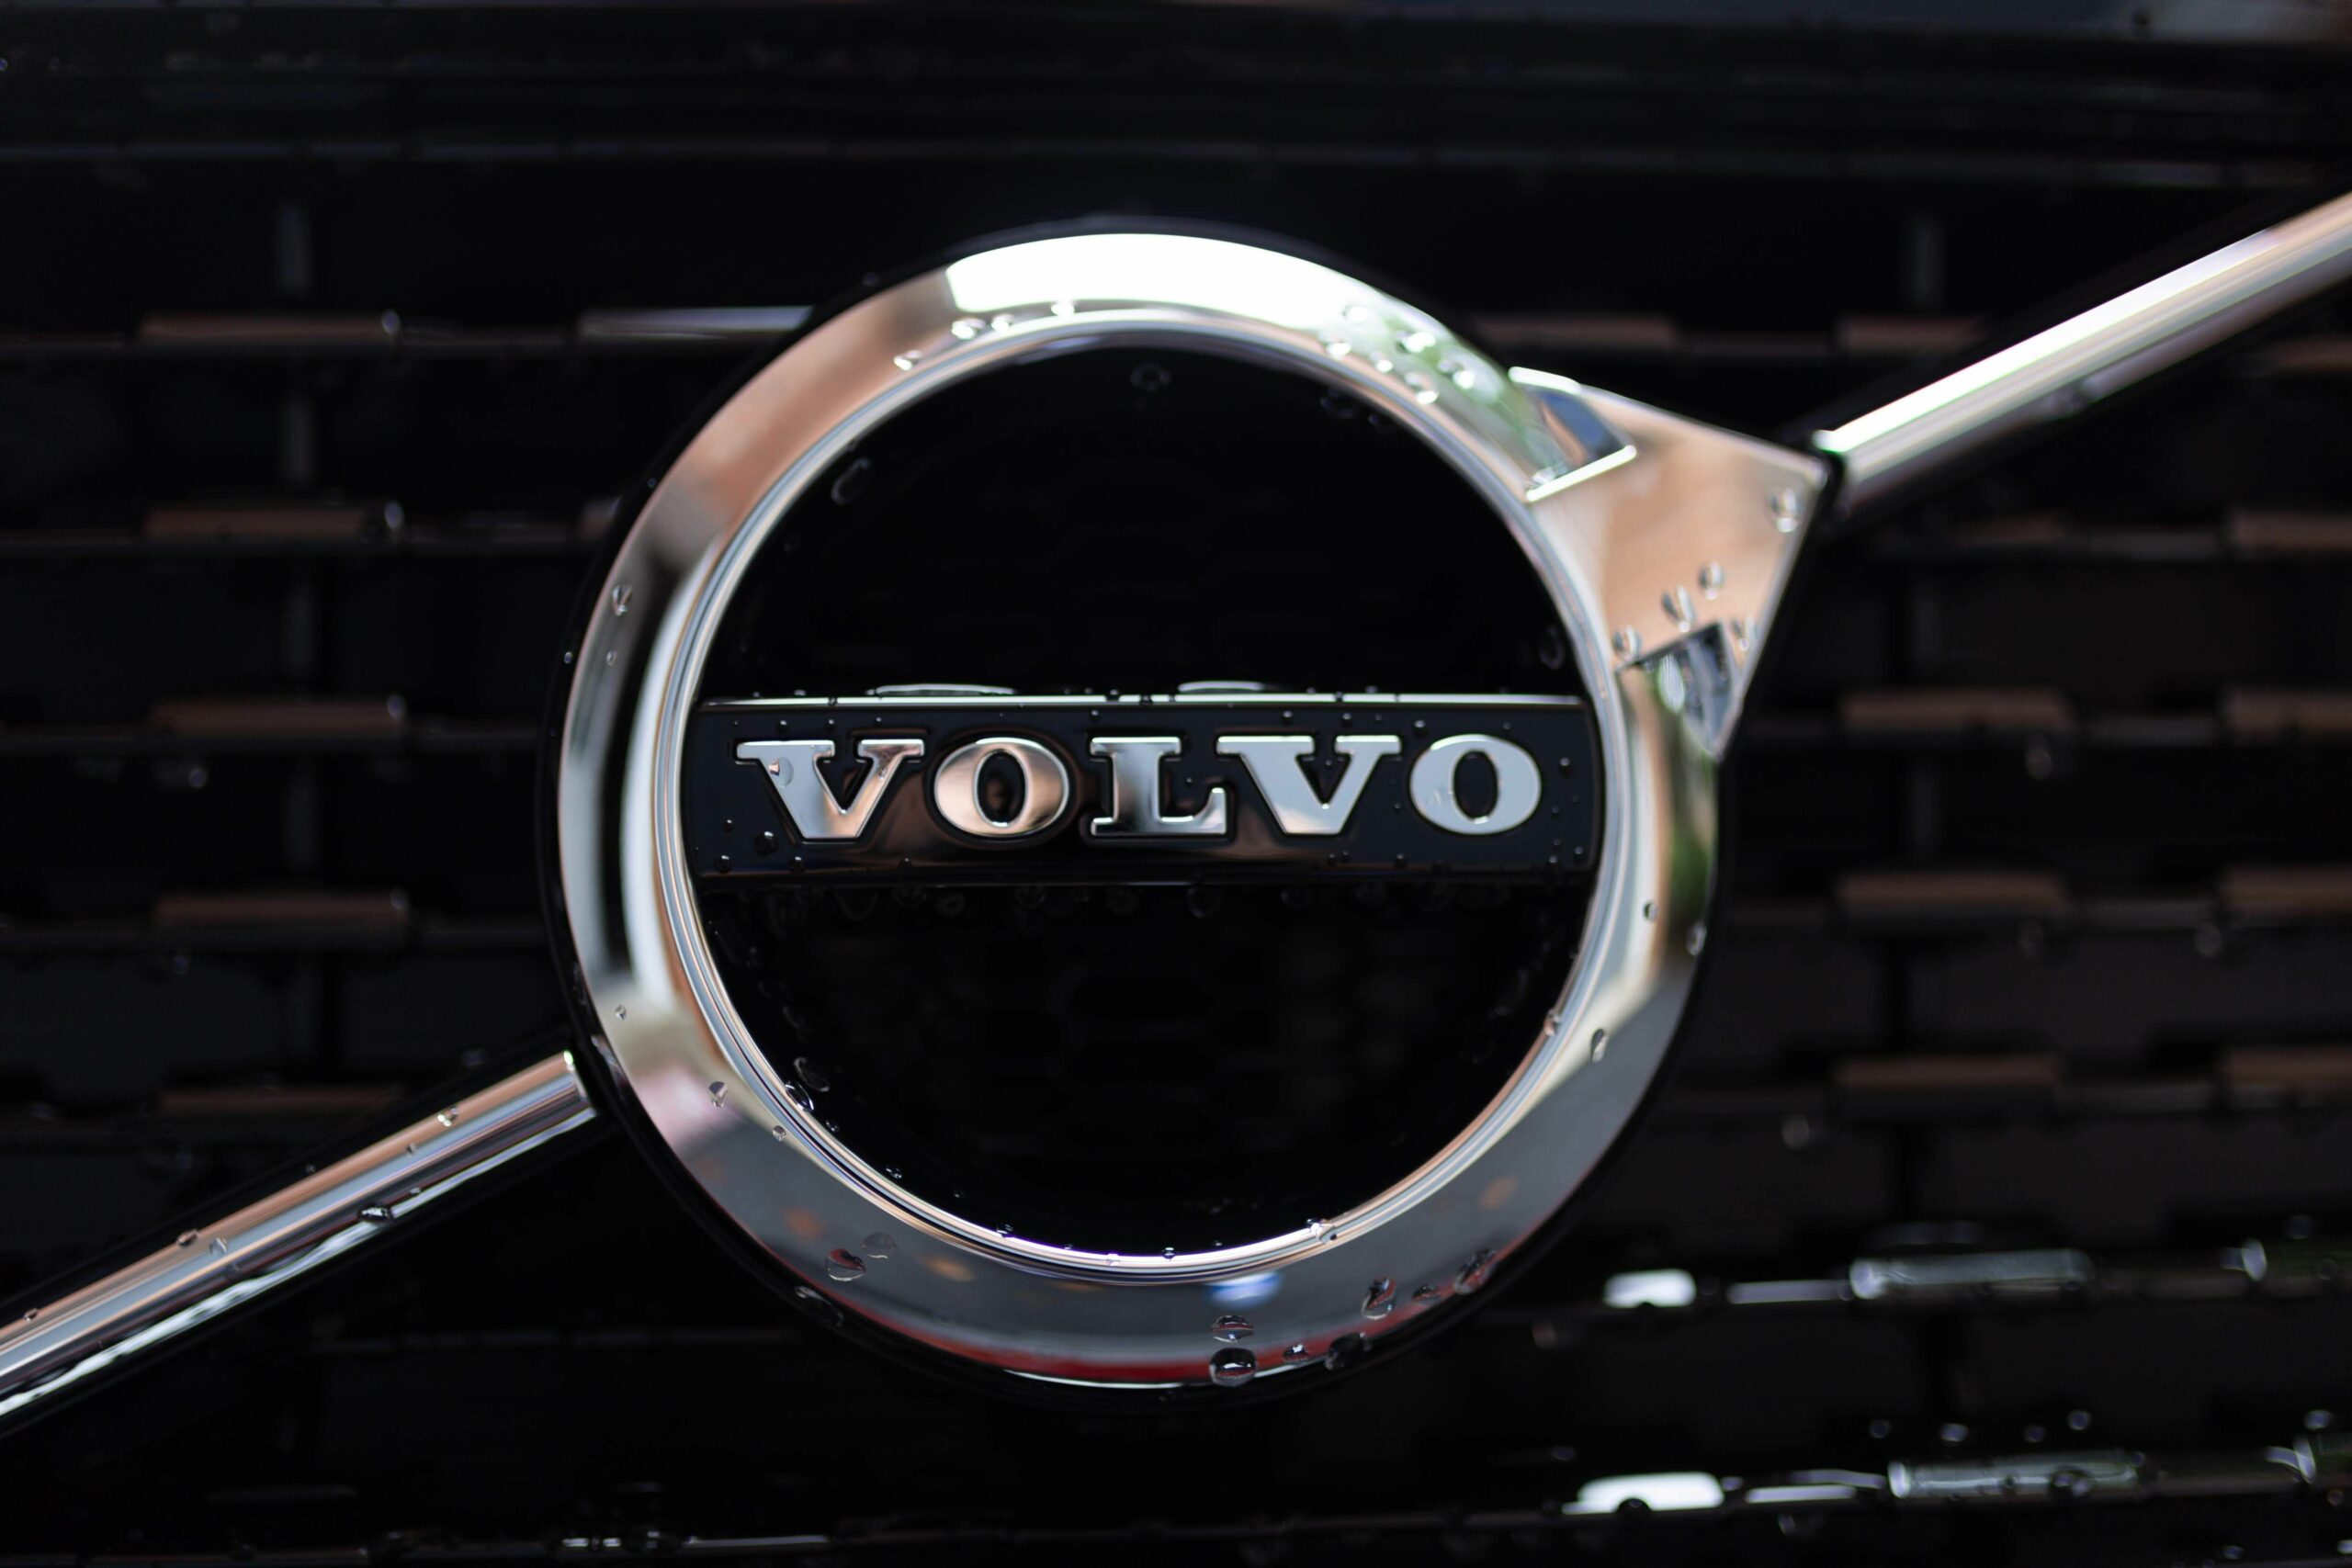 Who owns Volvo trucks?